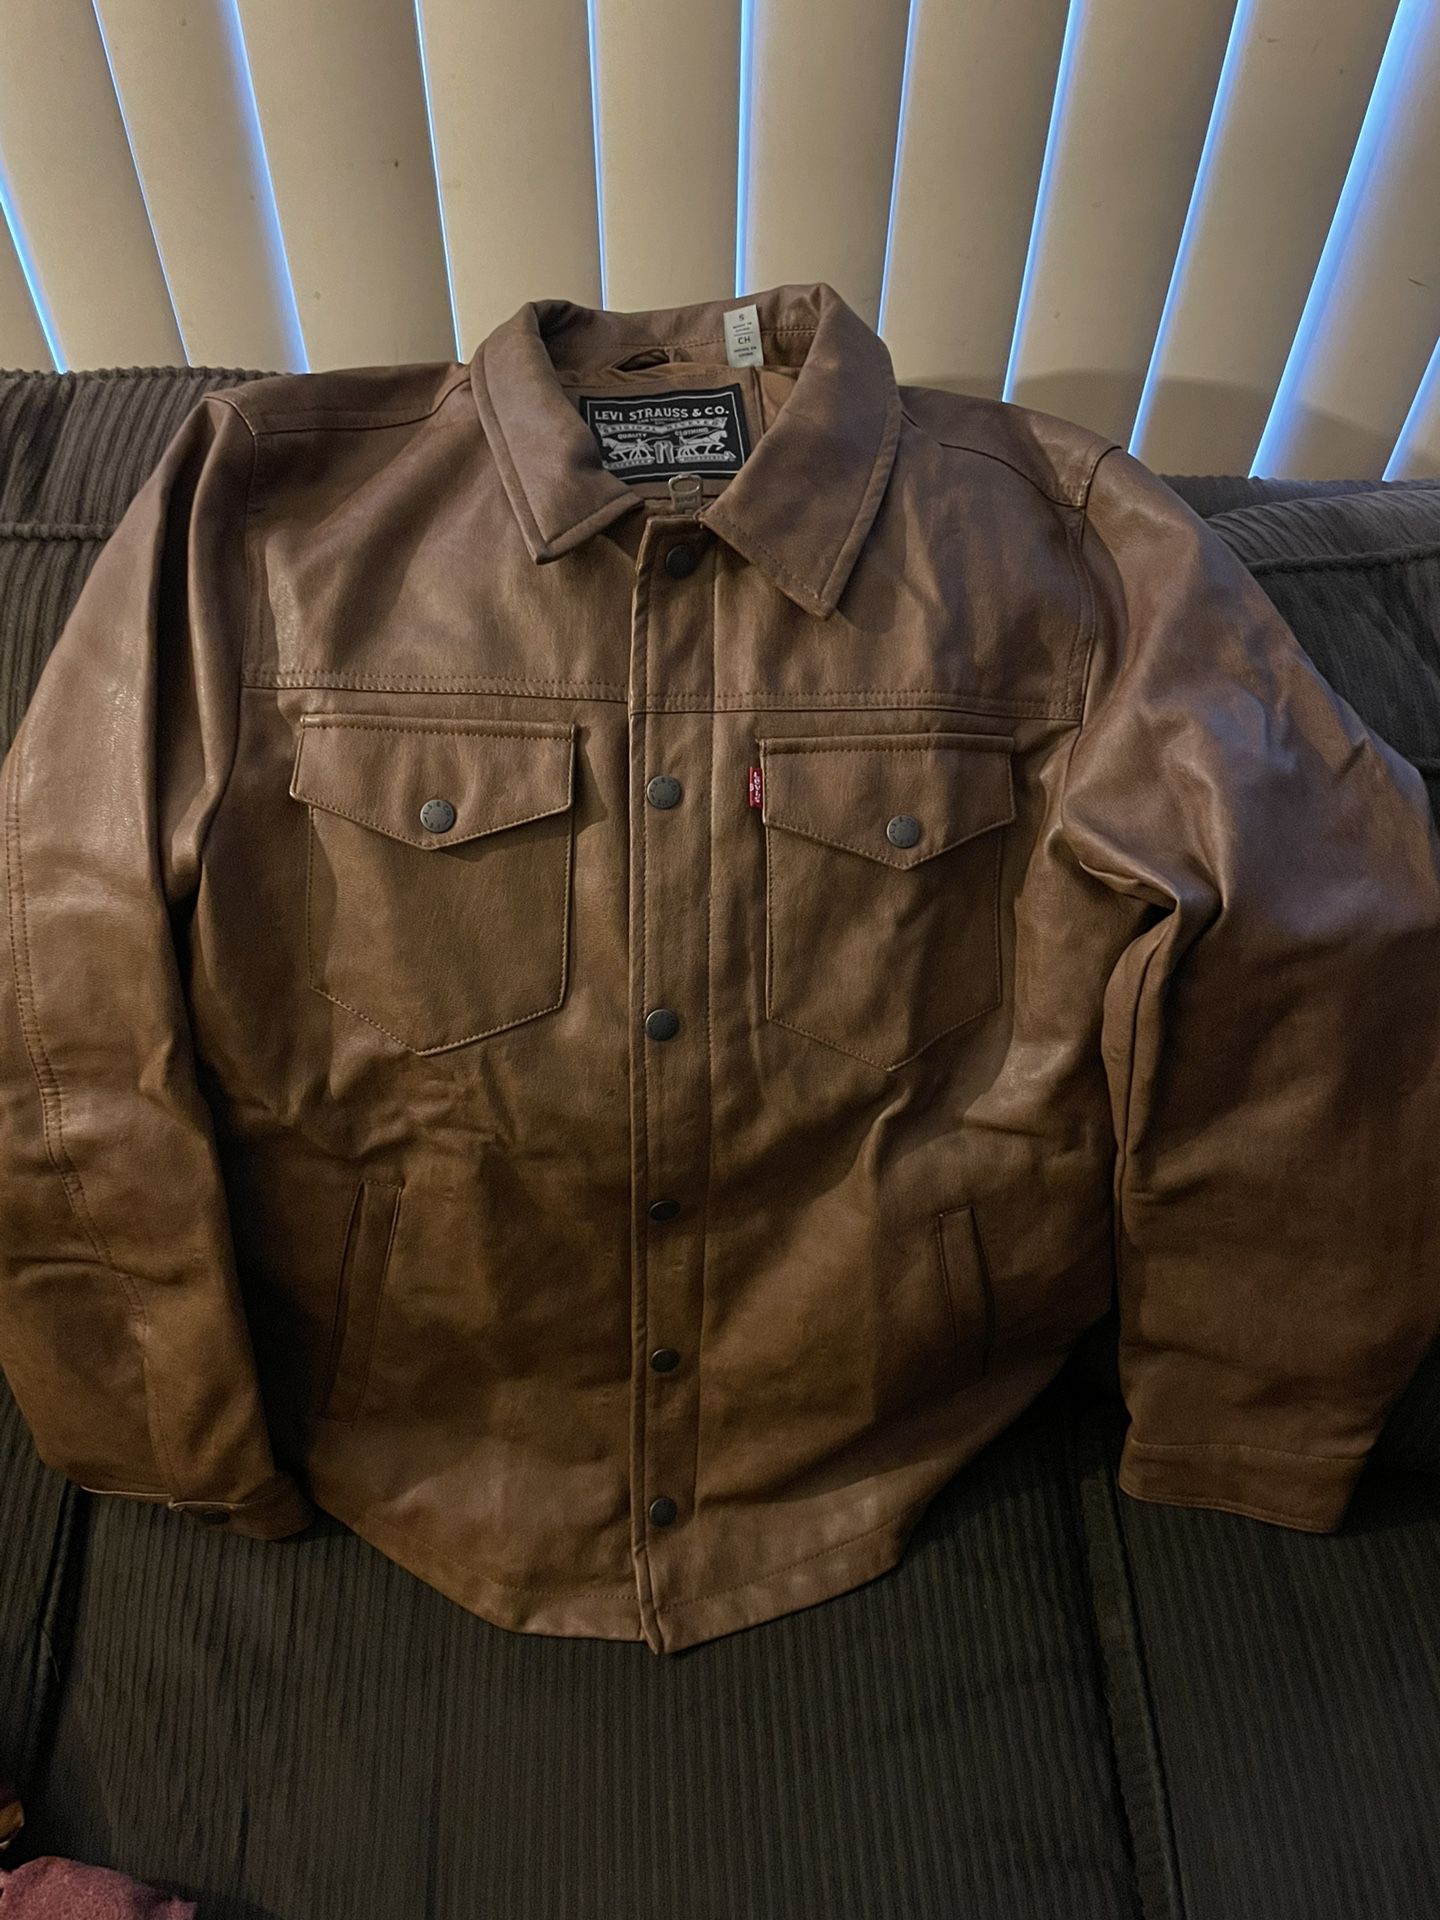 Faux Leather Levi Jacket/shirt Men Medium $50